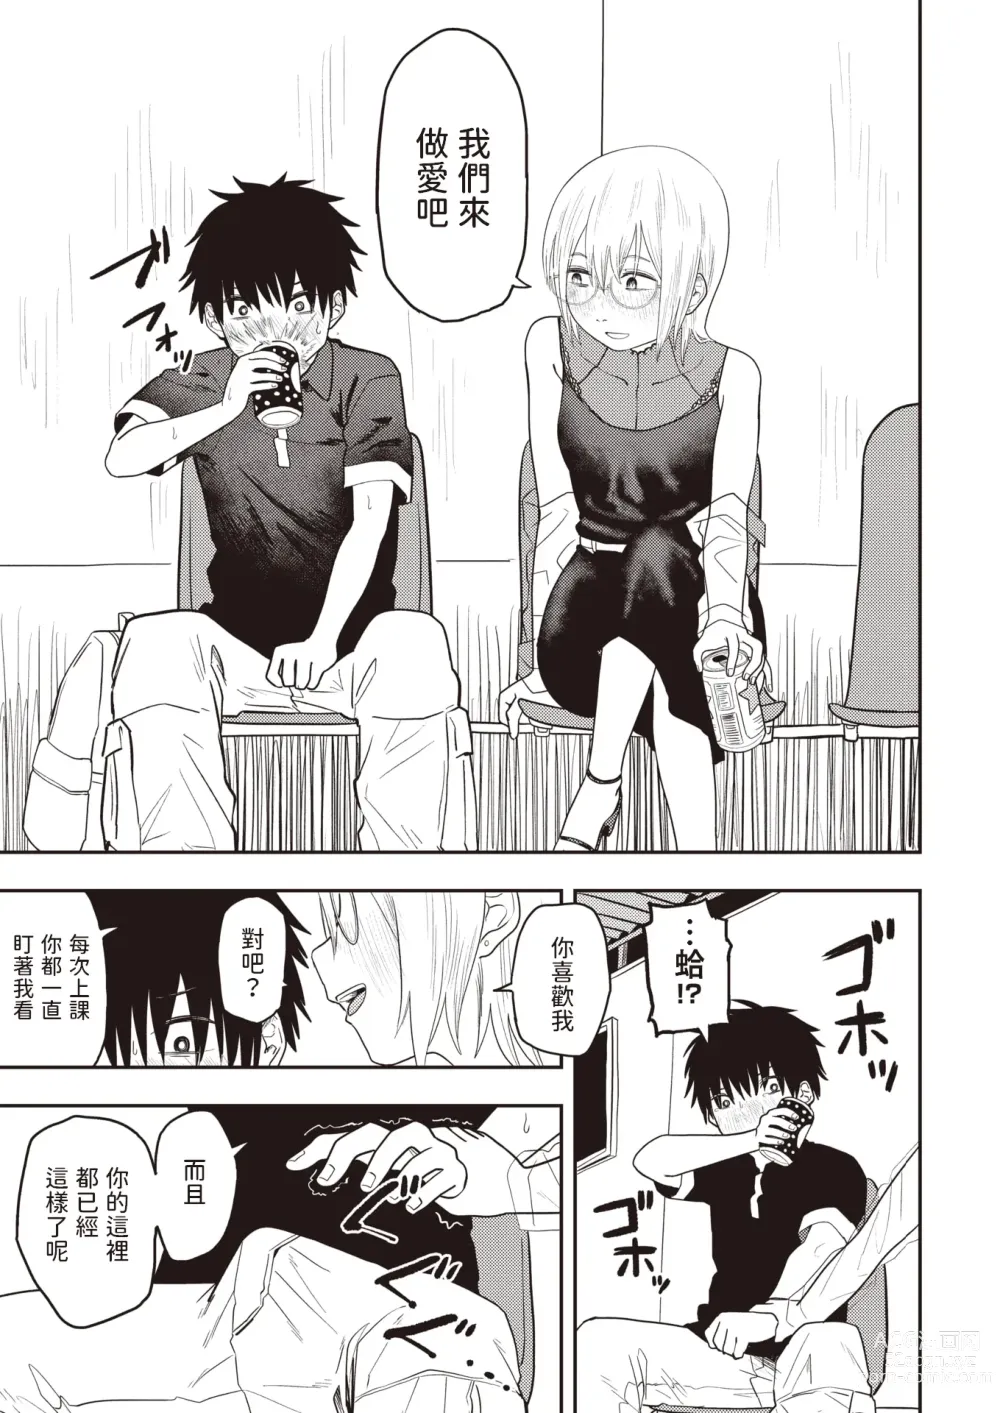 Page 9 of manga Hidoi yo Kiriyama Sensei - Thats really mean!